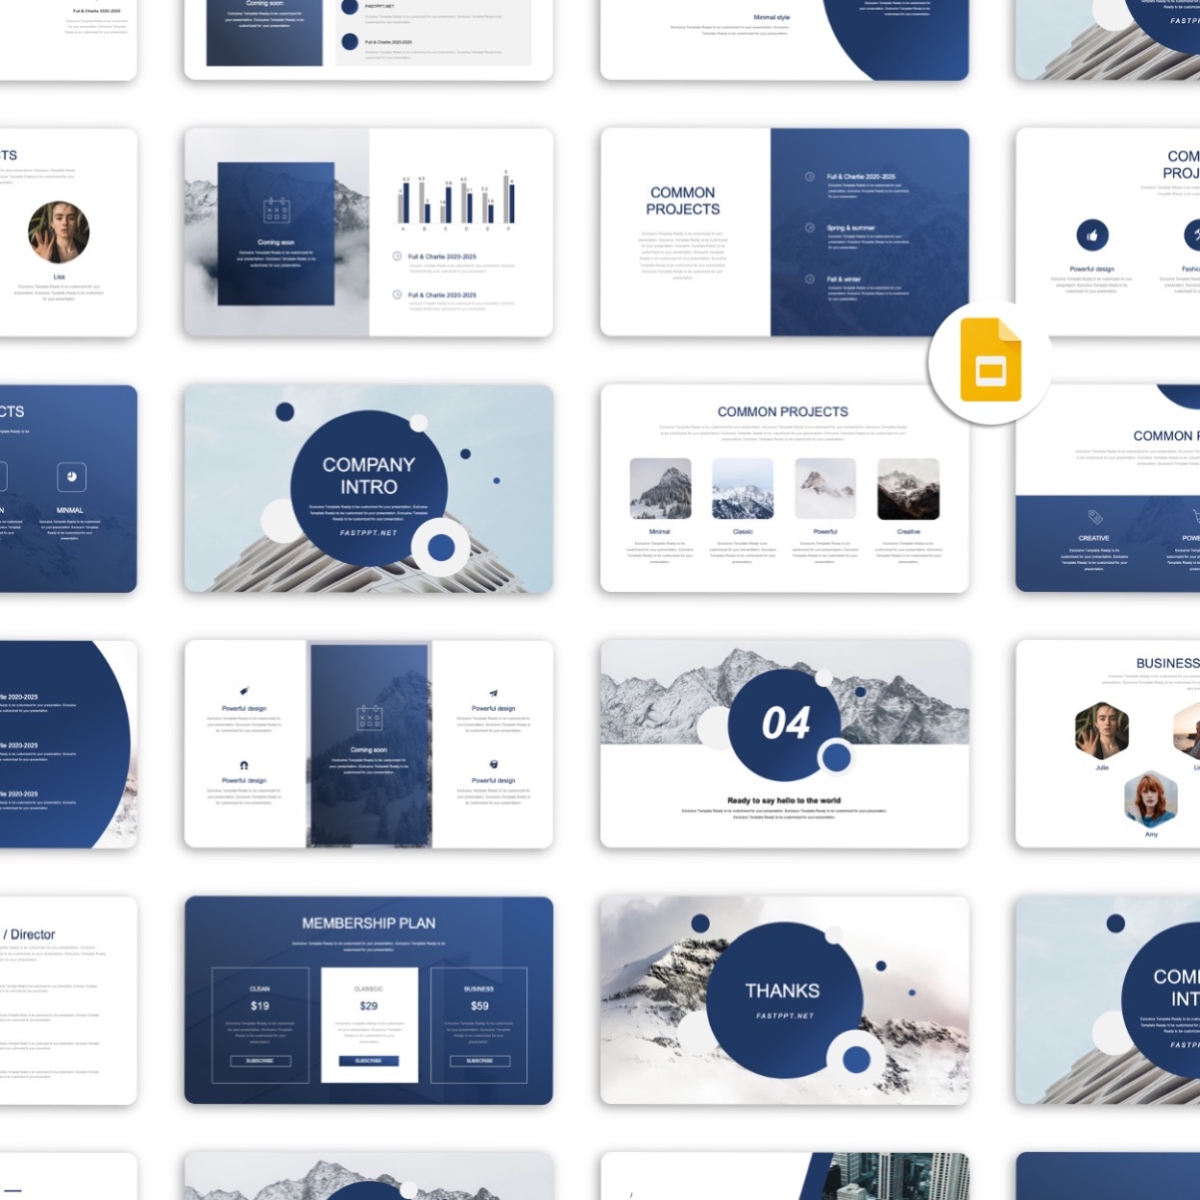 Google Slides-A Business Plan & Introduction Presentation Template